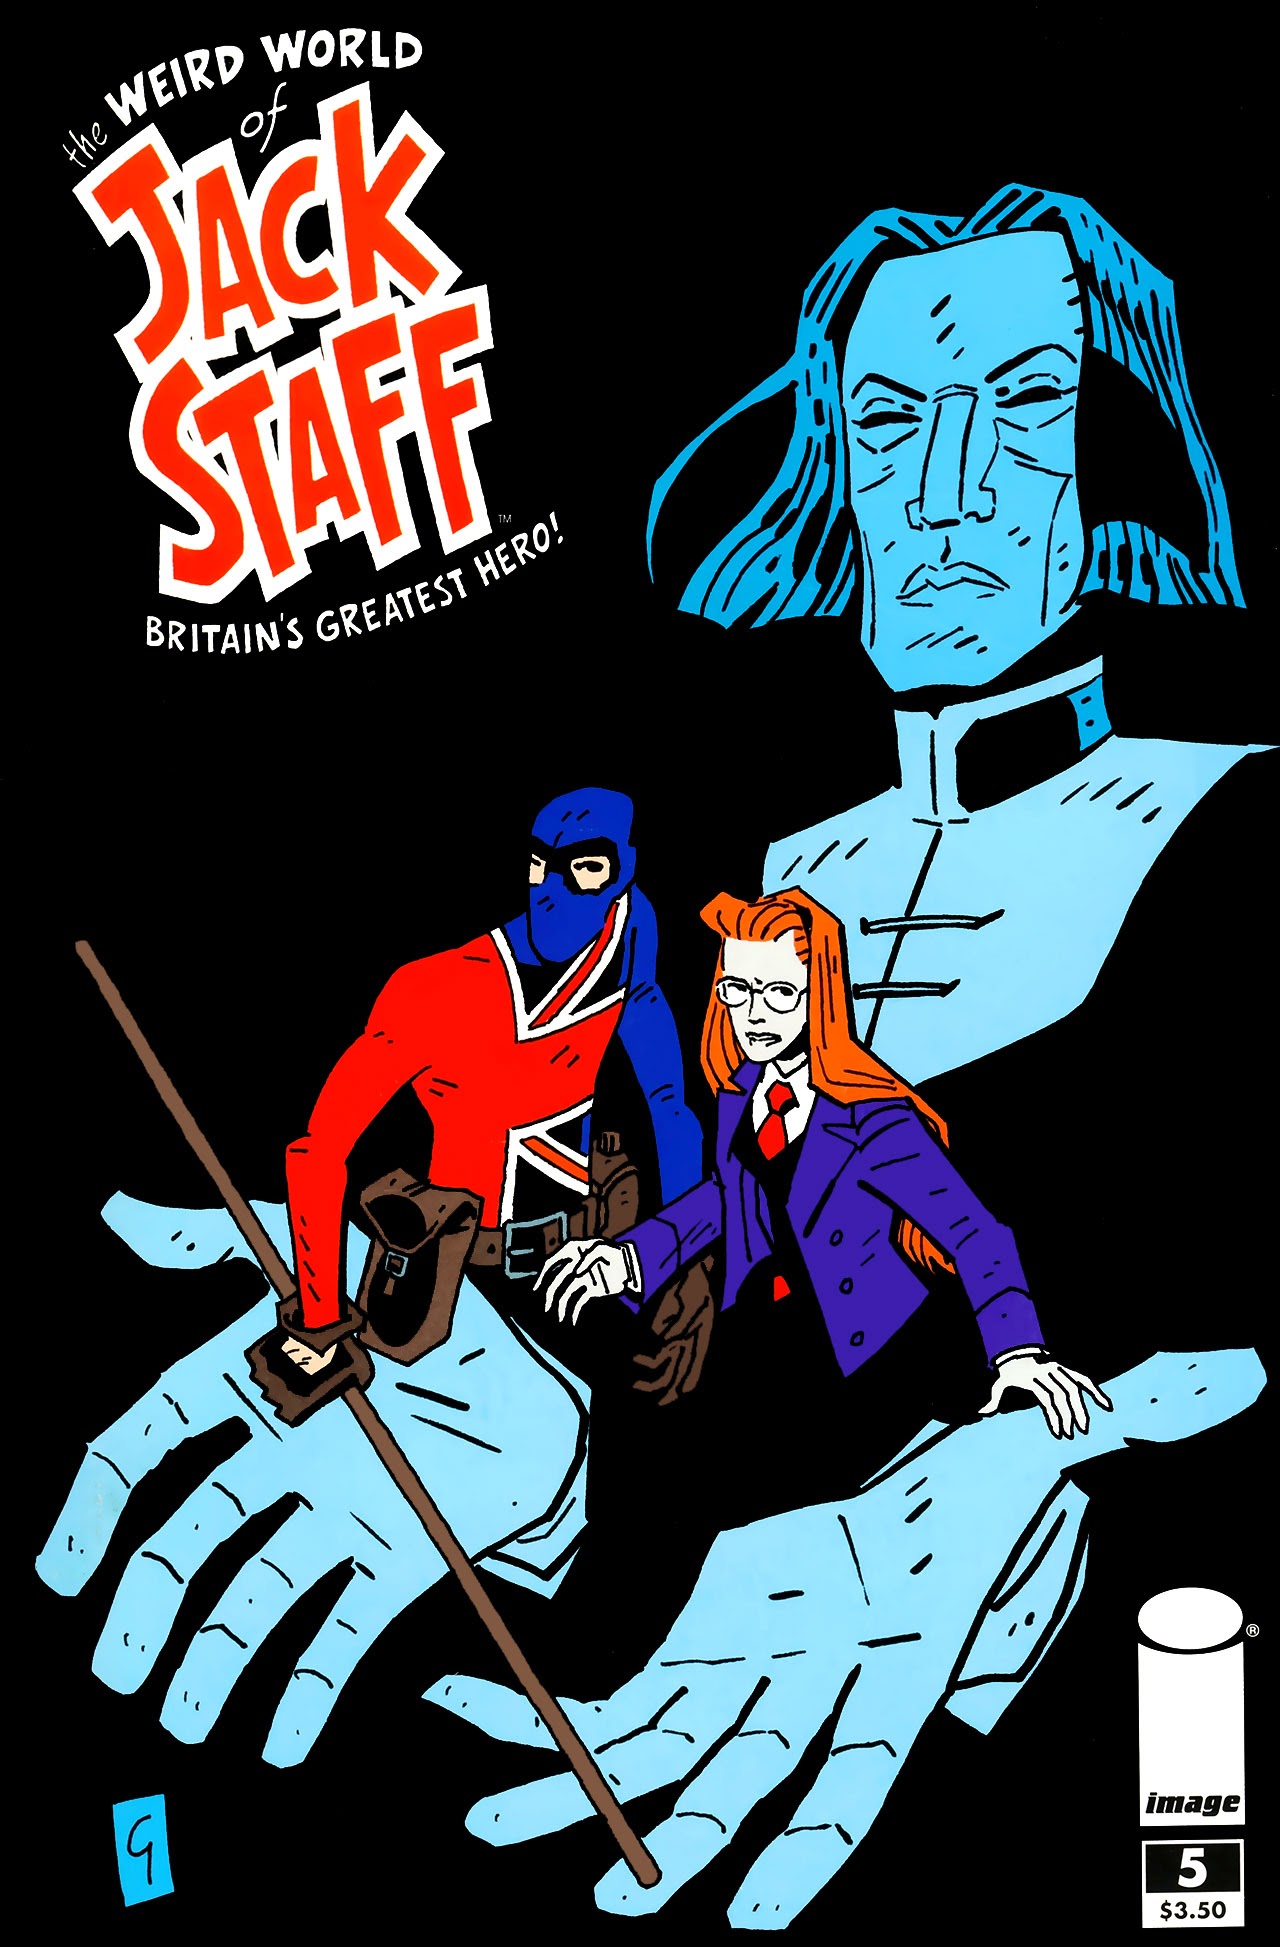 Read online Weird World of Jack Staff comic -  Issue #5 - 1